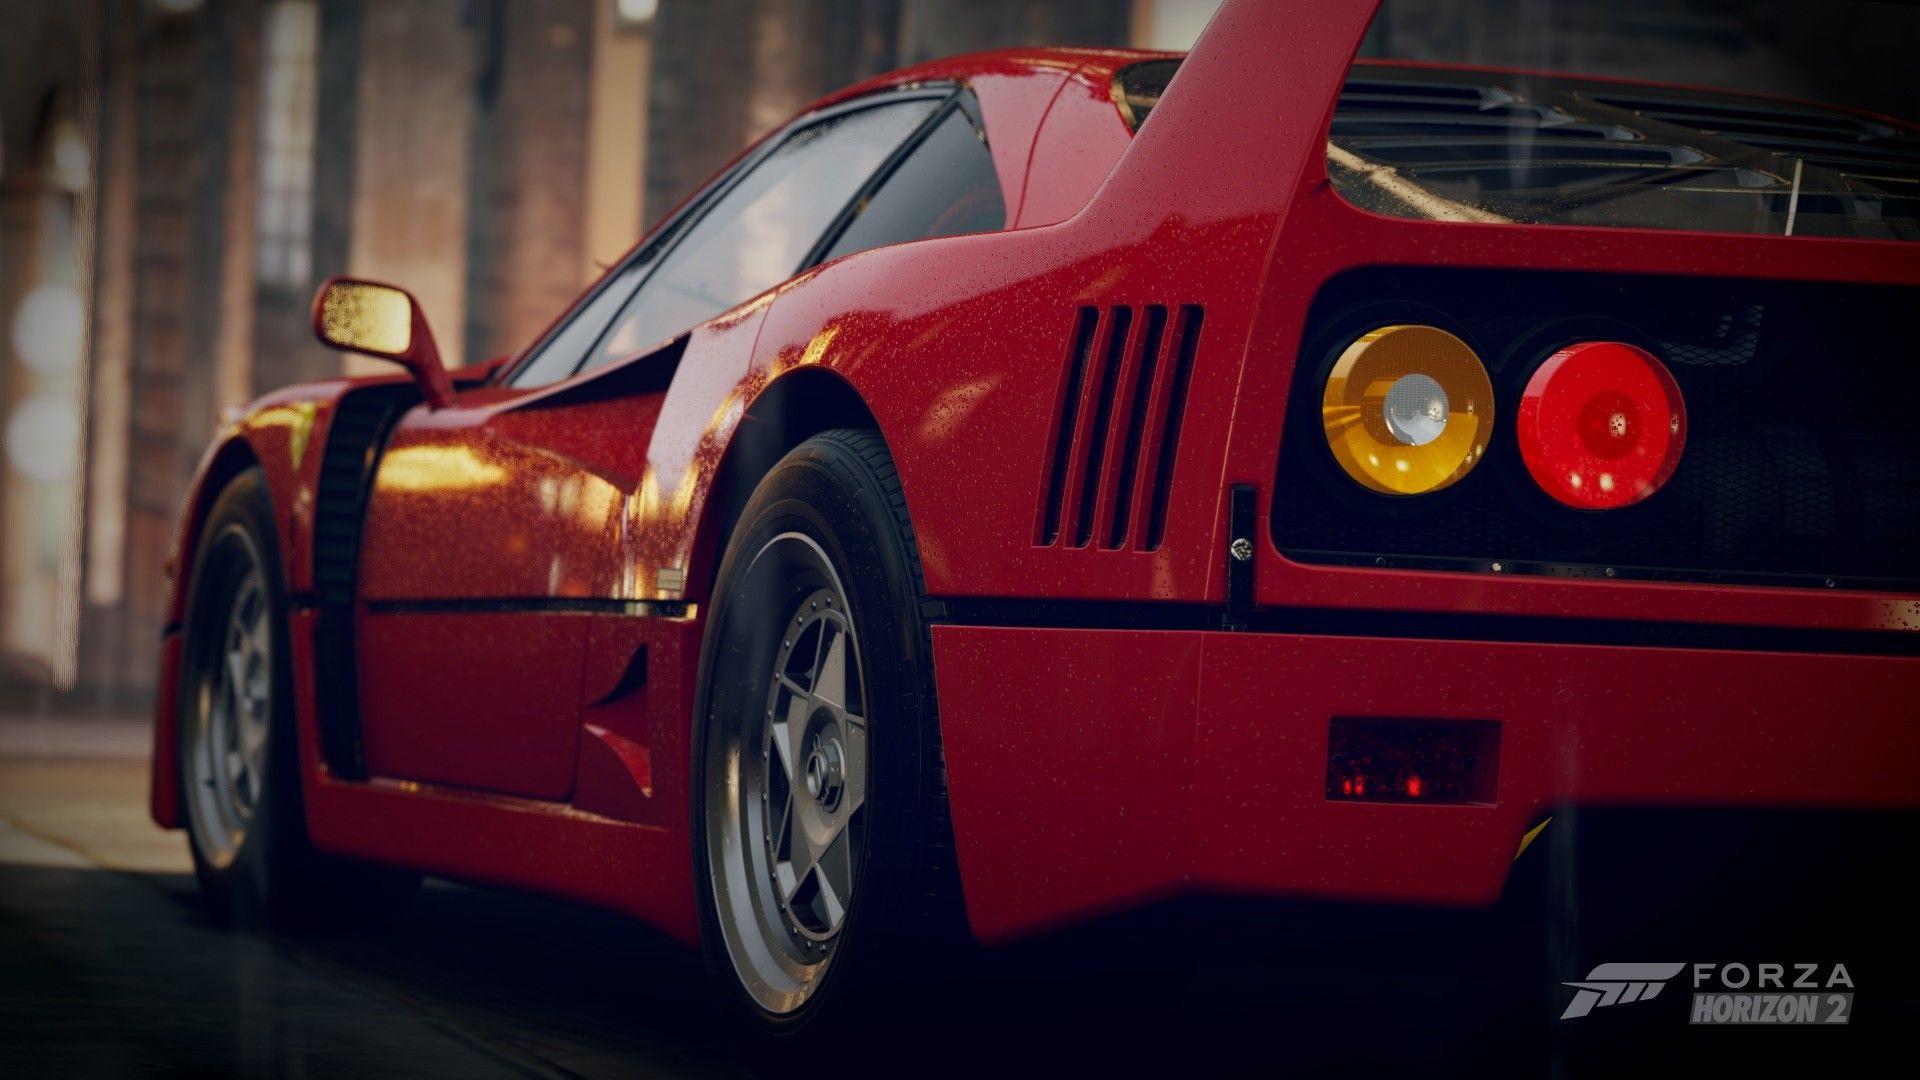 Ferrari F40 HD Wallpaper Desktop Image and Photo